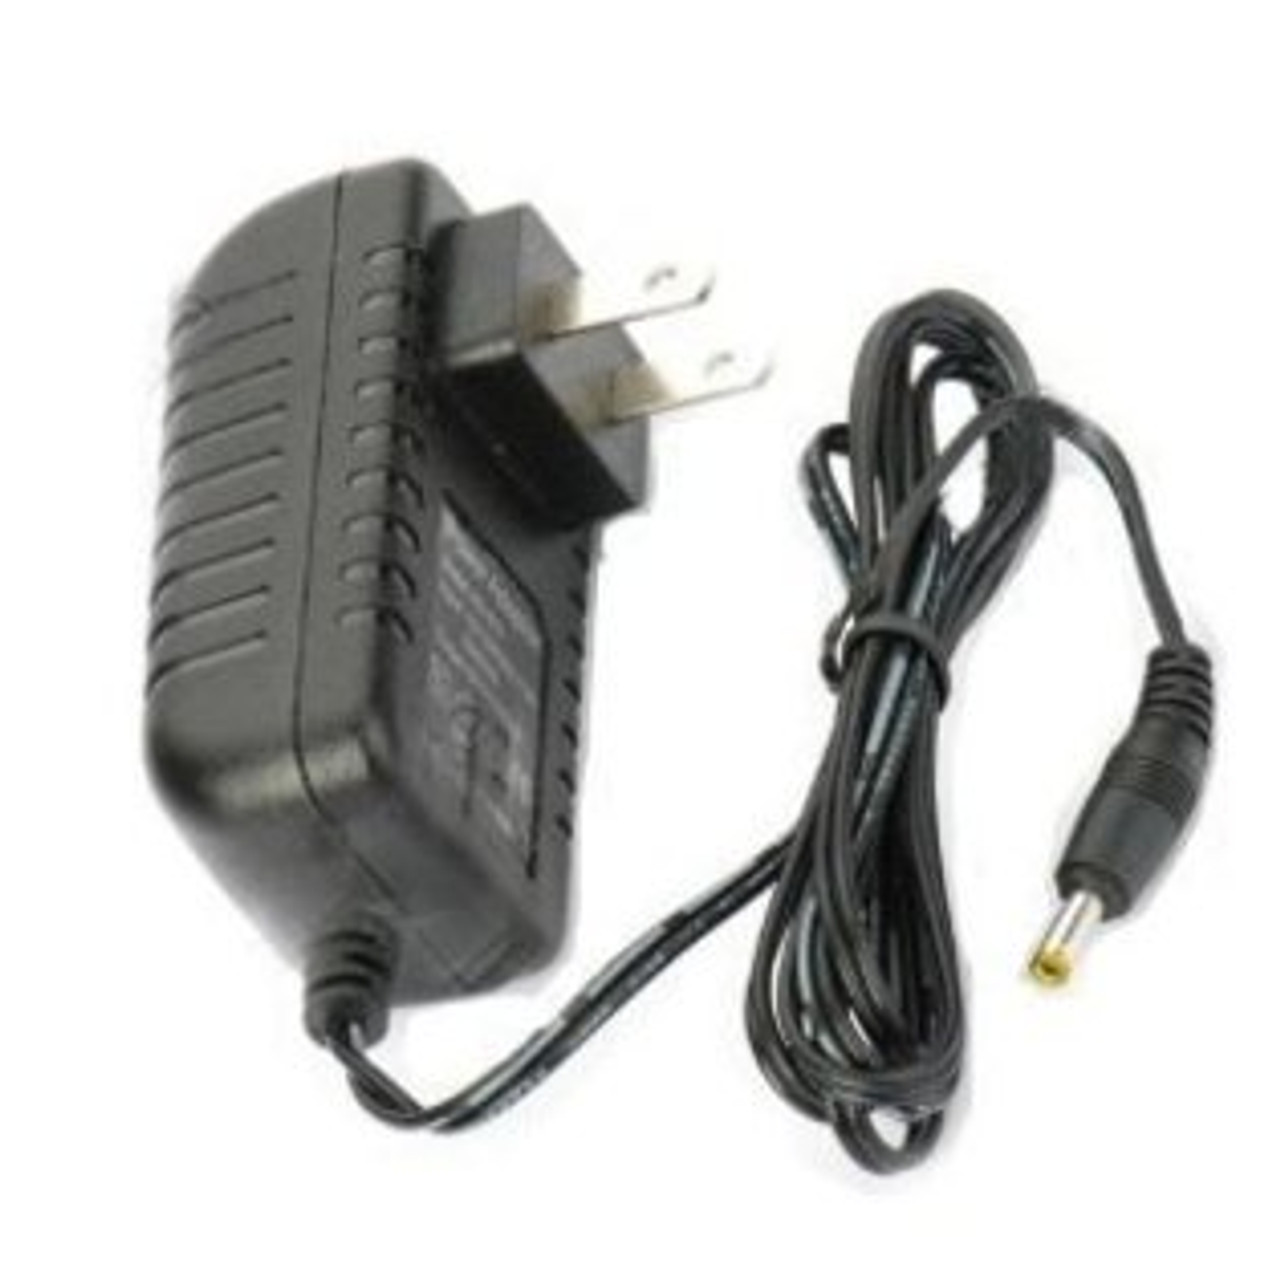 3Com 3C10444-US NBX DC Power Supply Adapter